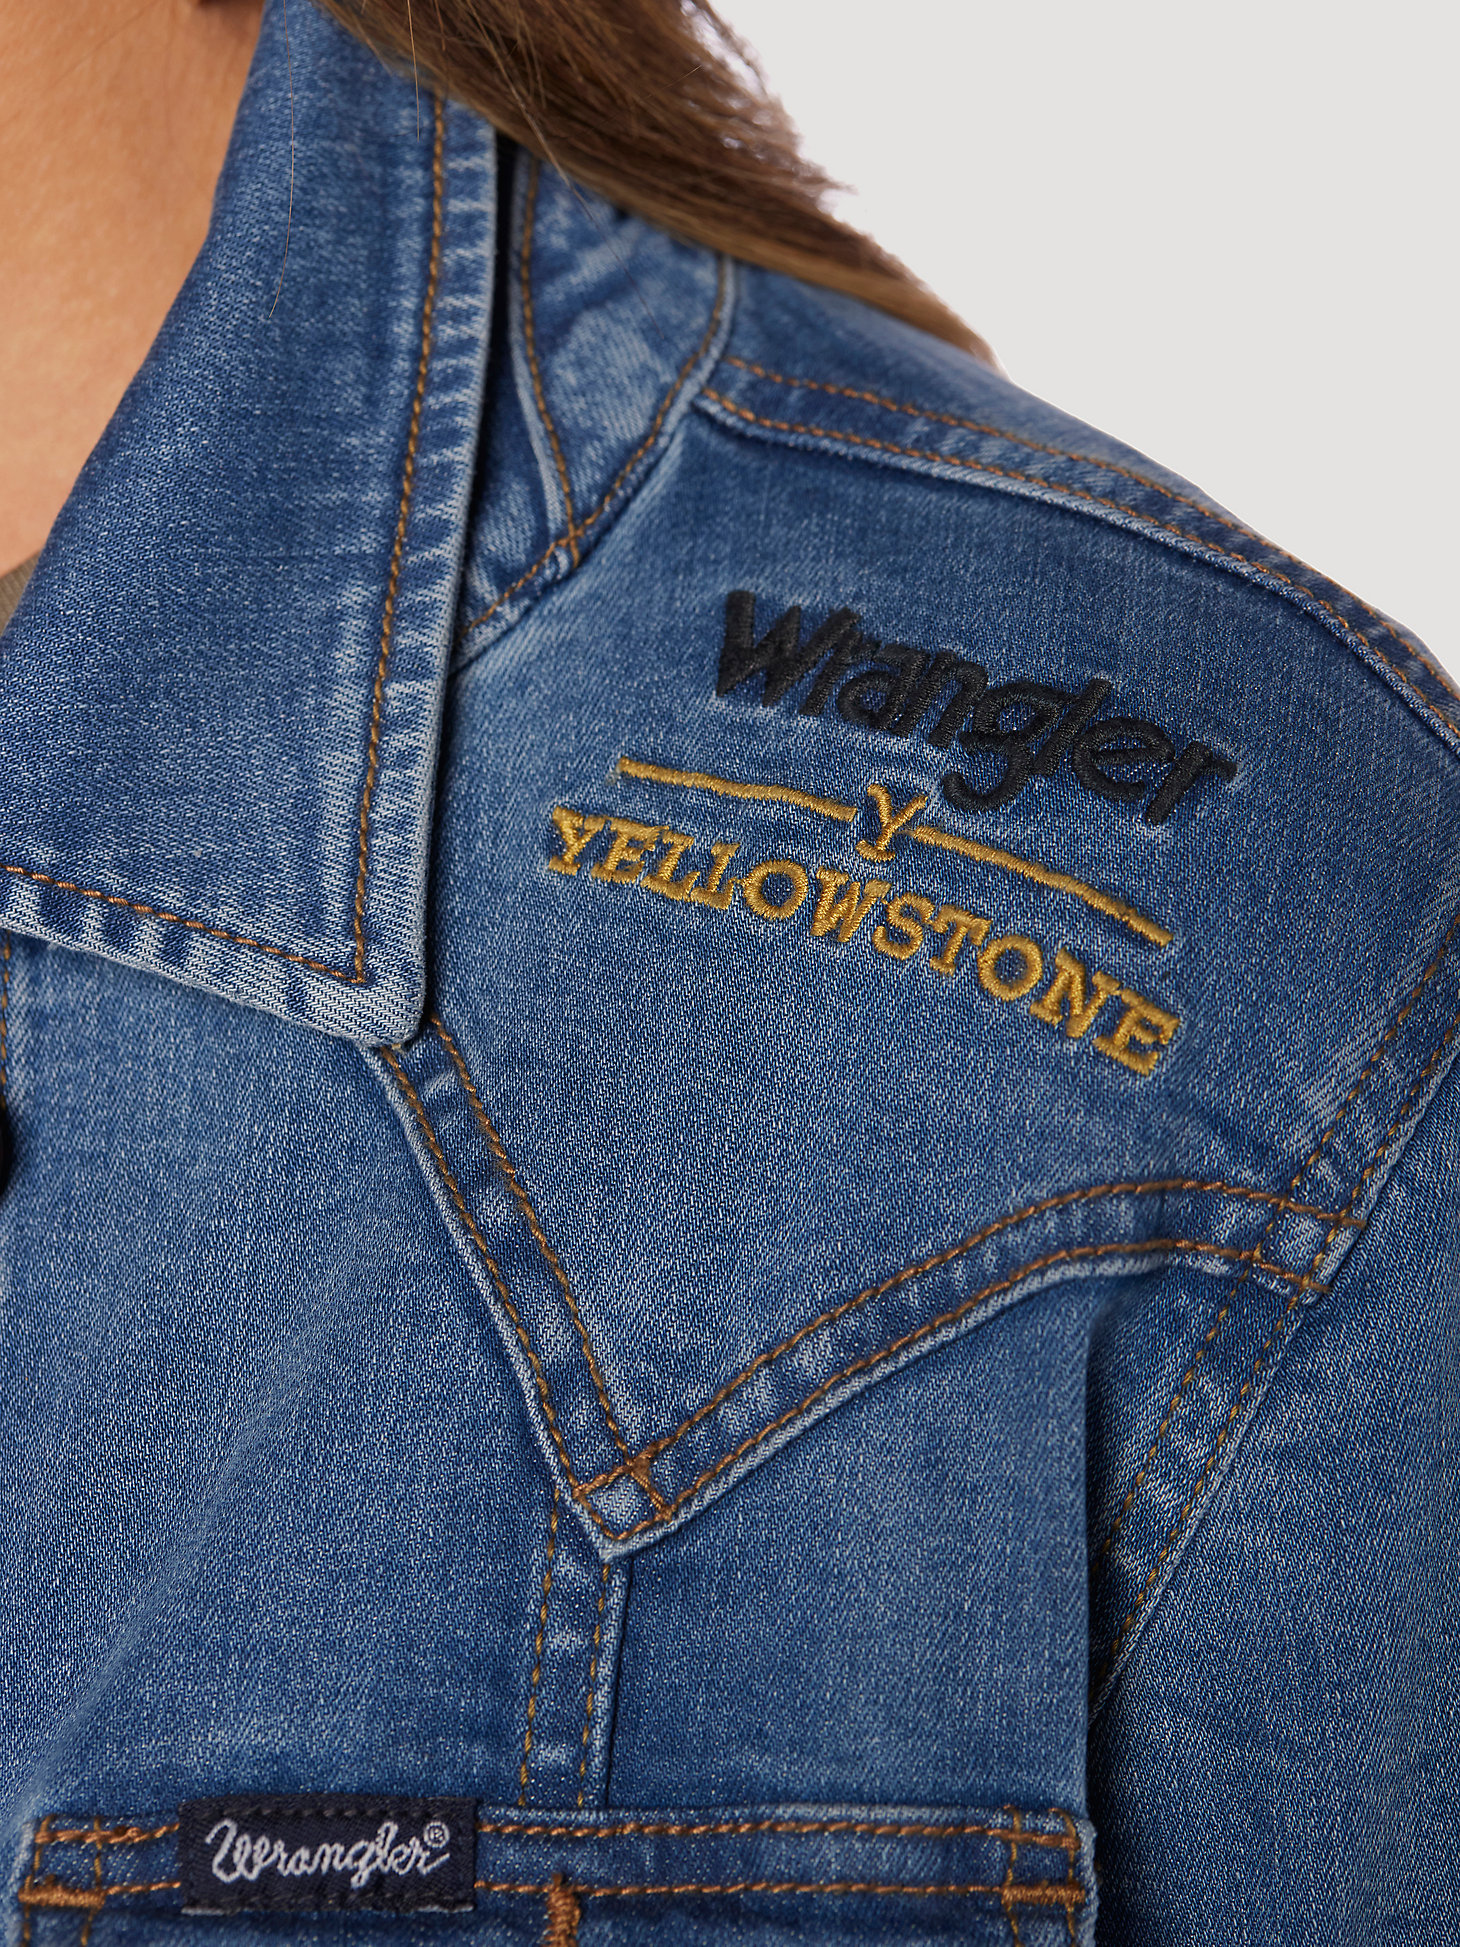 Wrangler x Yellowstone Women's Laser Denim Jacket in Medium Wash alternative view 2